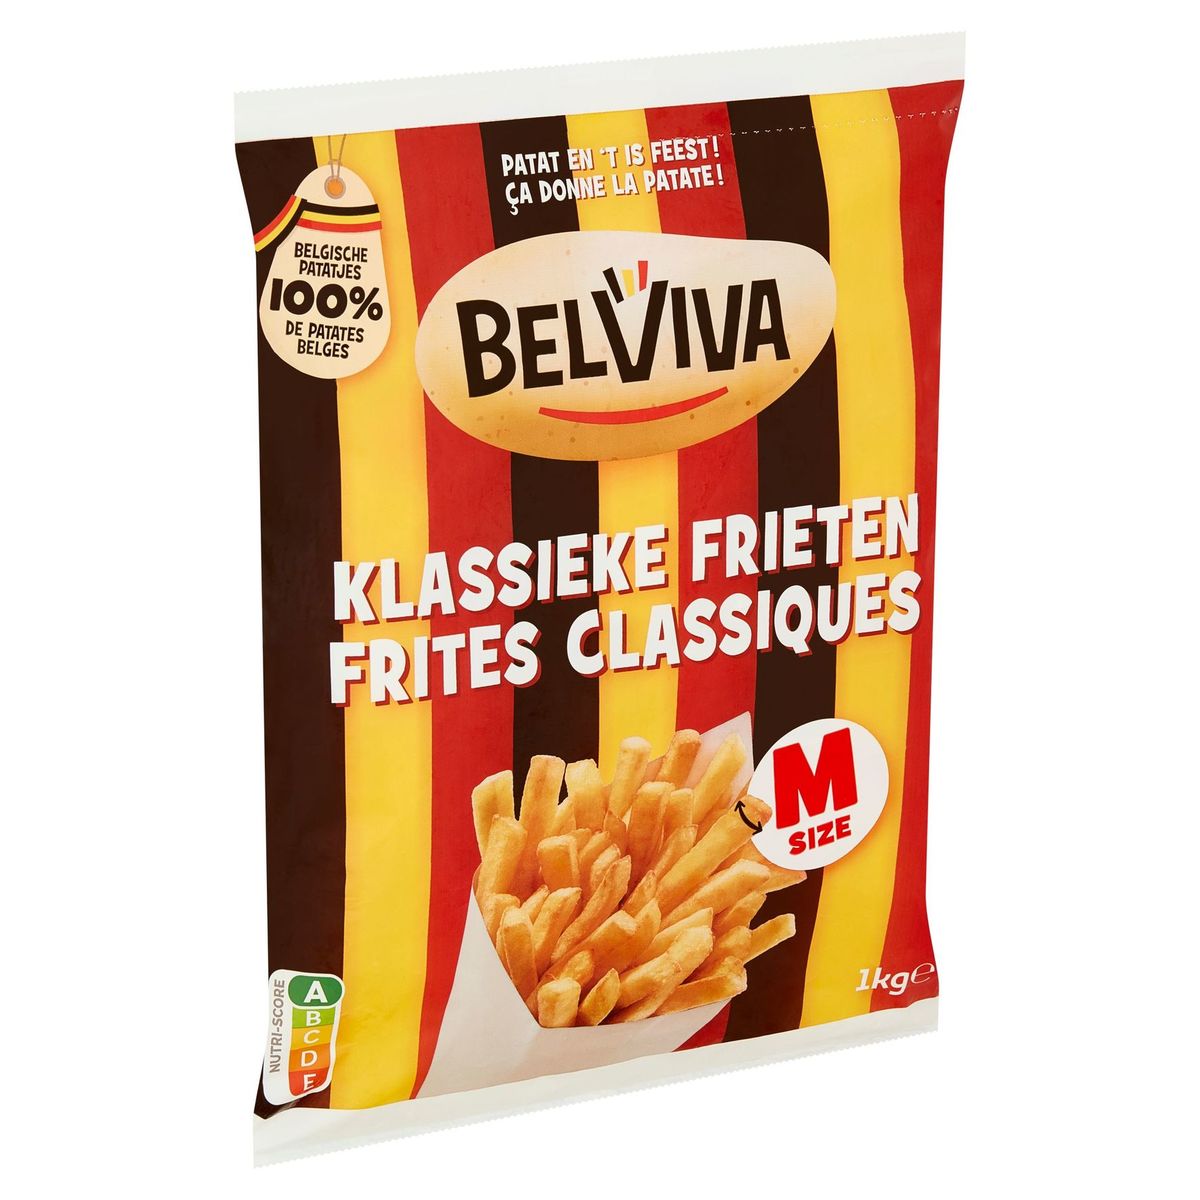 Belviva Klassieke Frieten M Size 1 kg